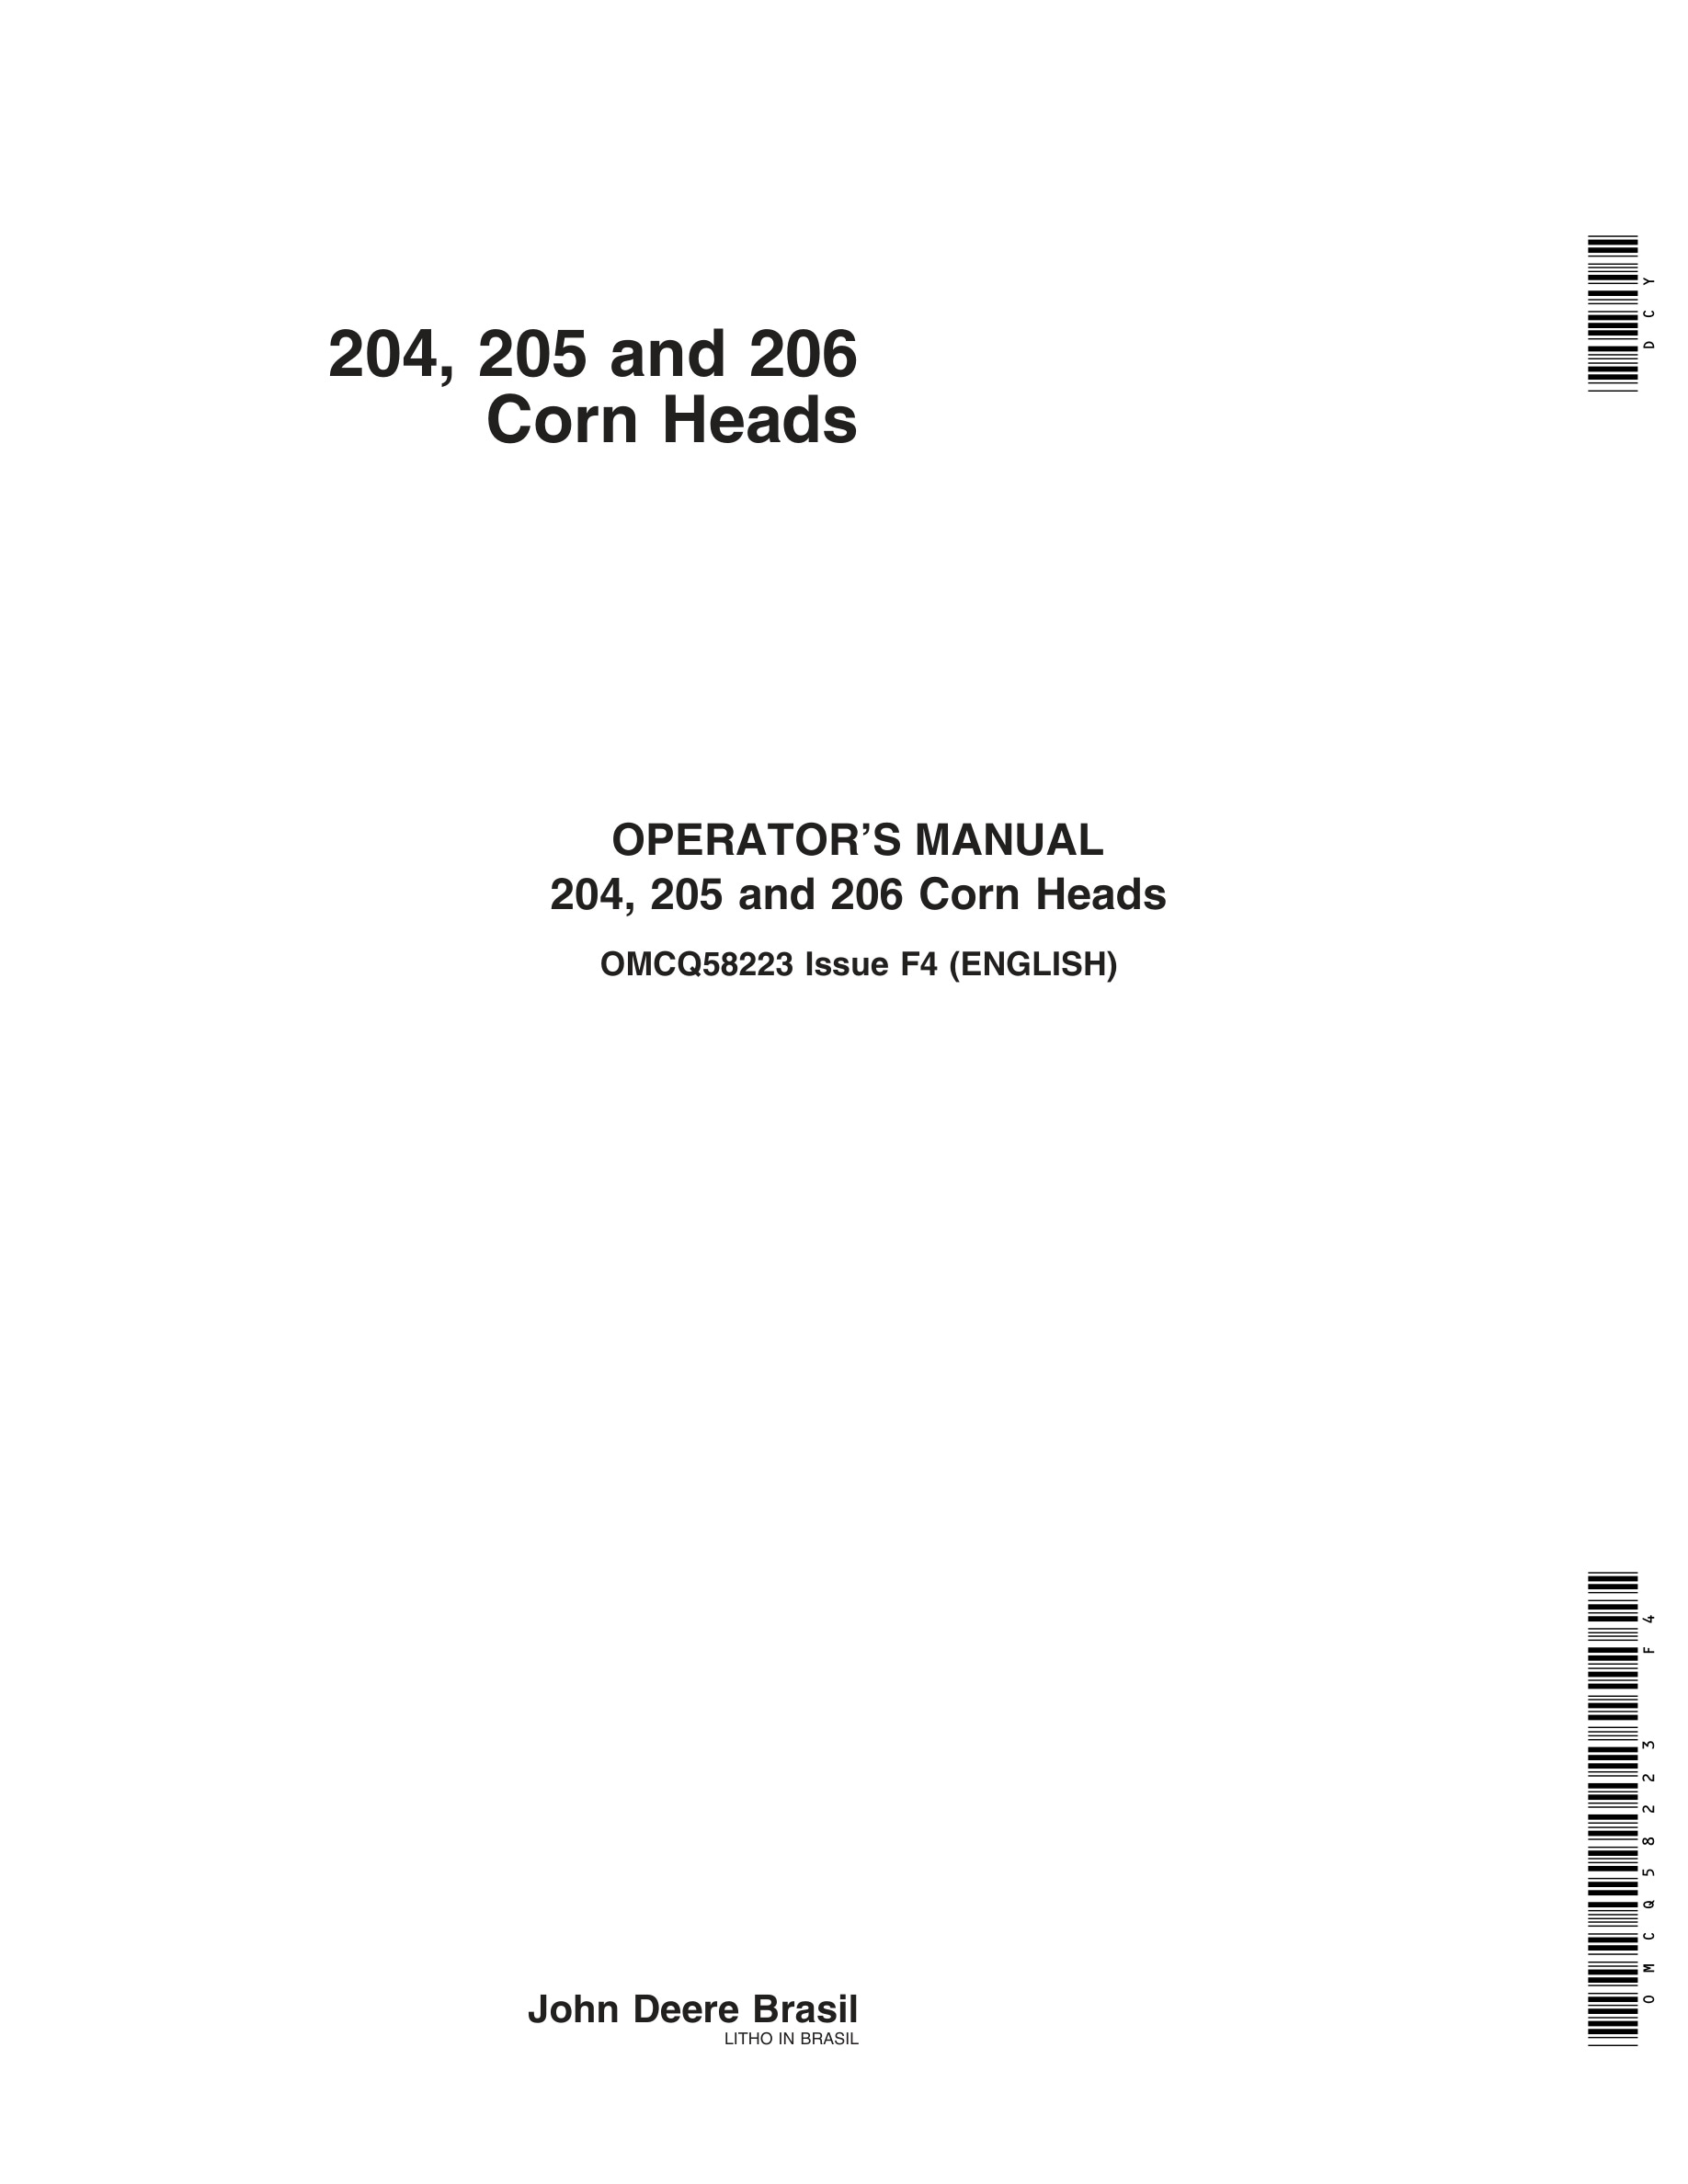 John Deere 204, 205 and 206 Corn Heads Operator Manual OMCQ58223-1